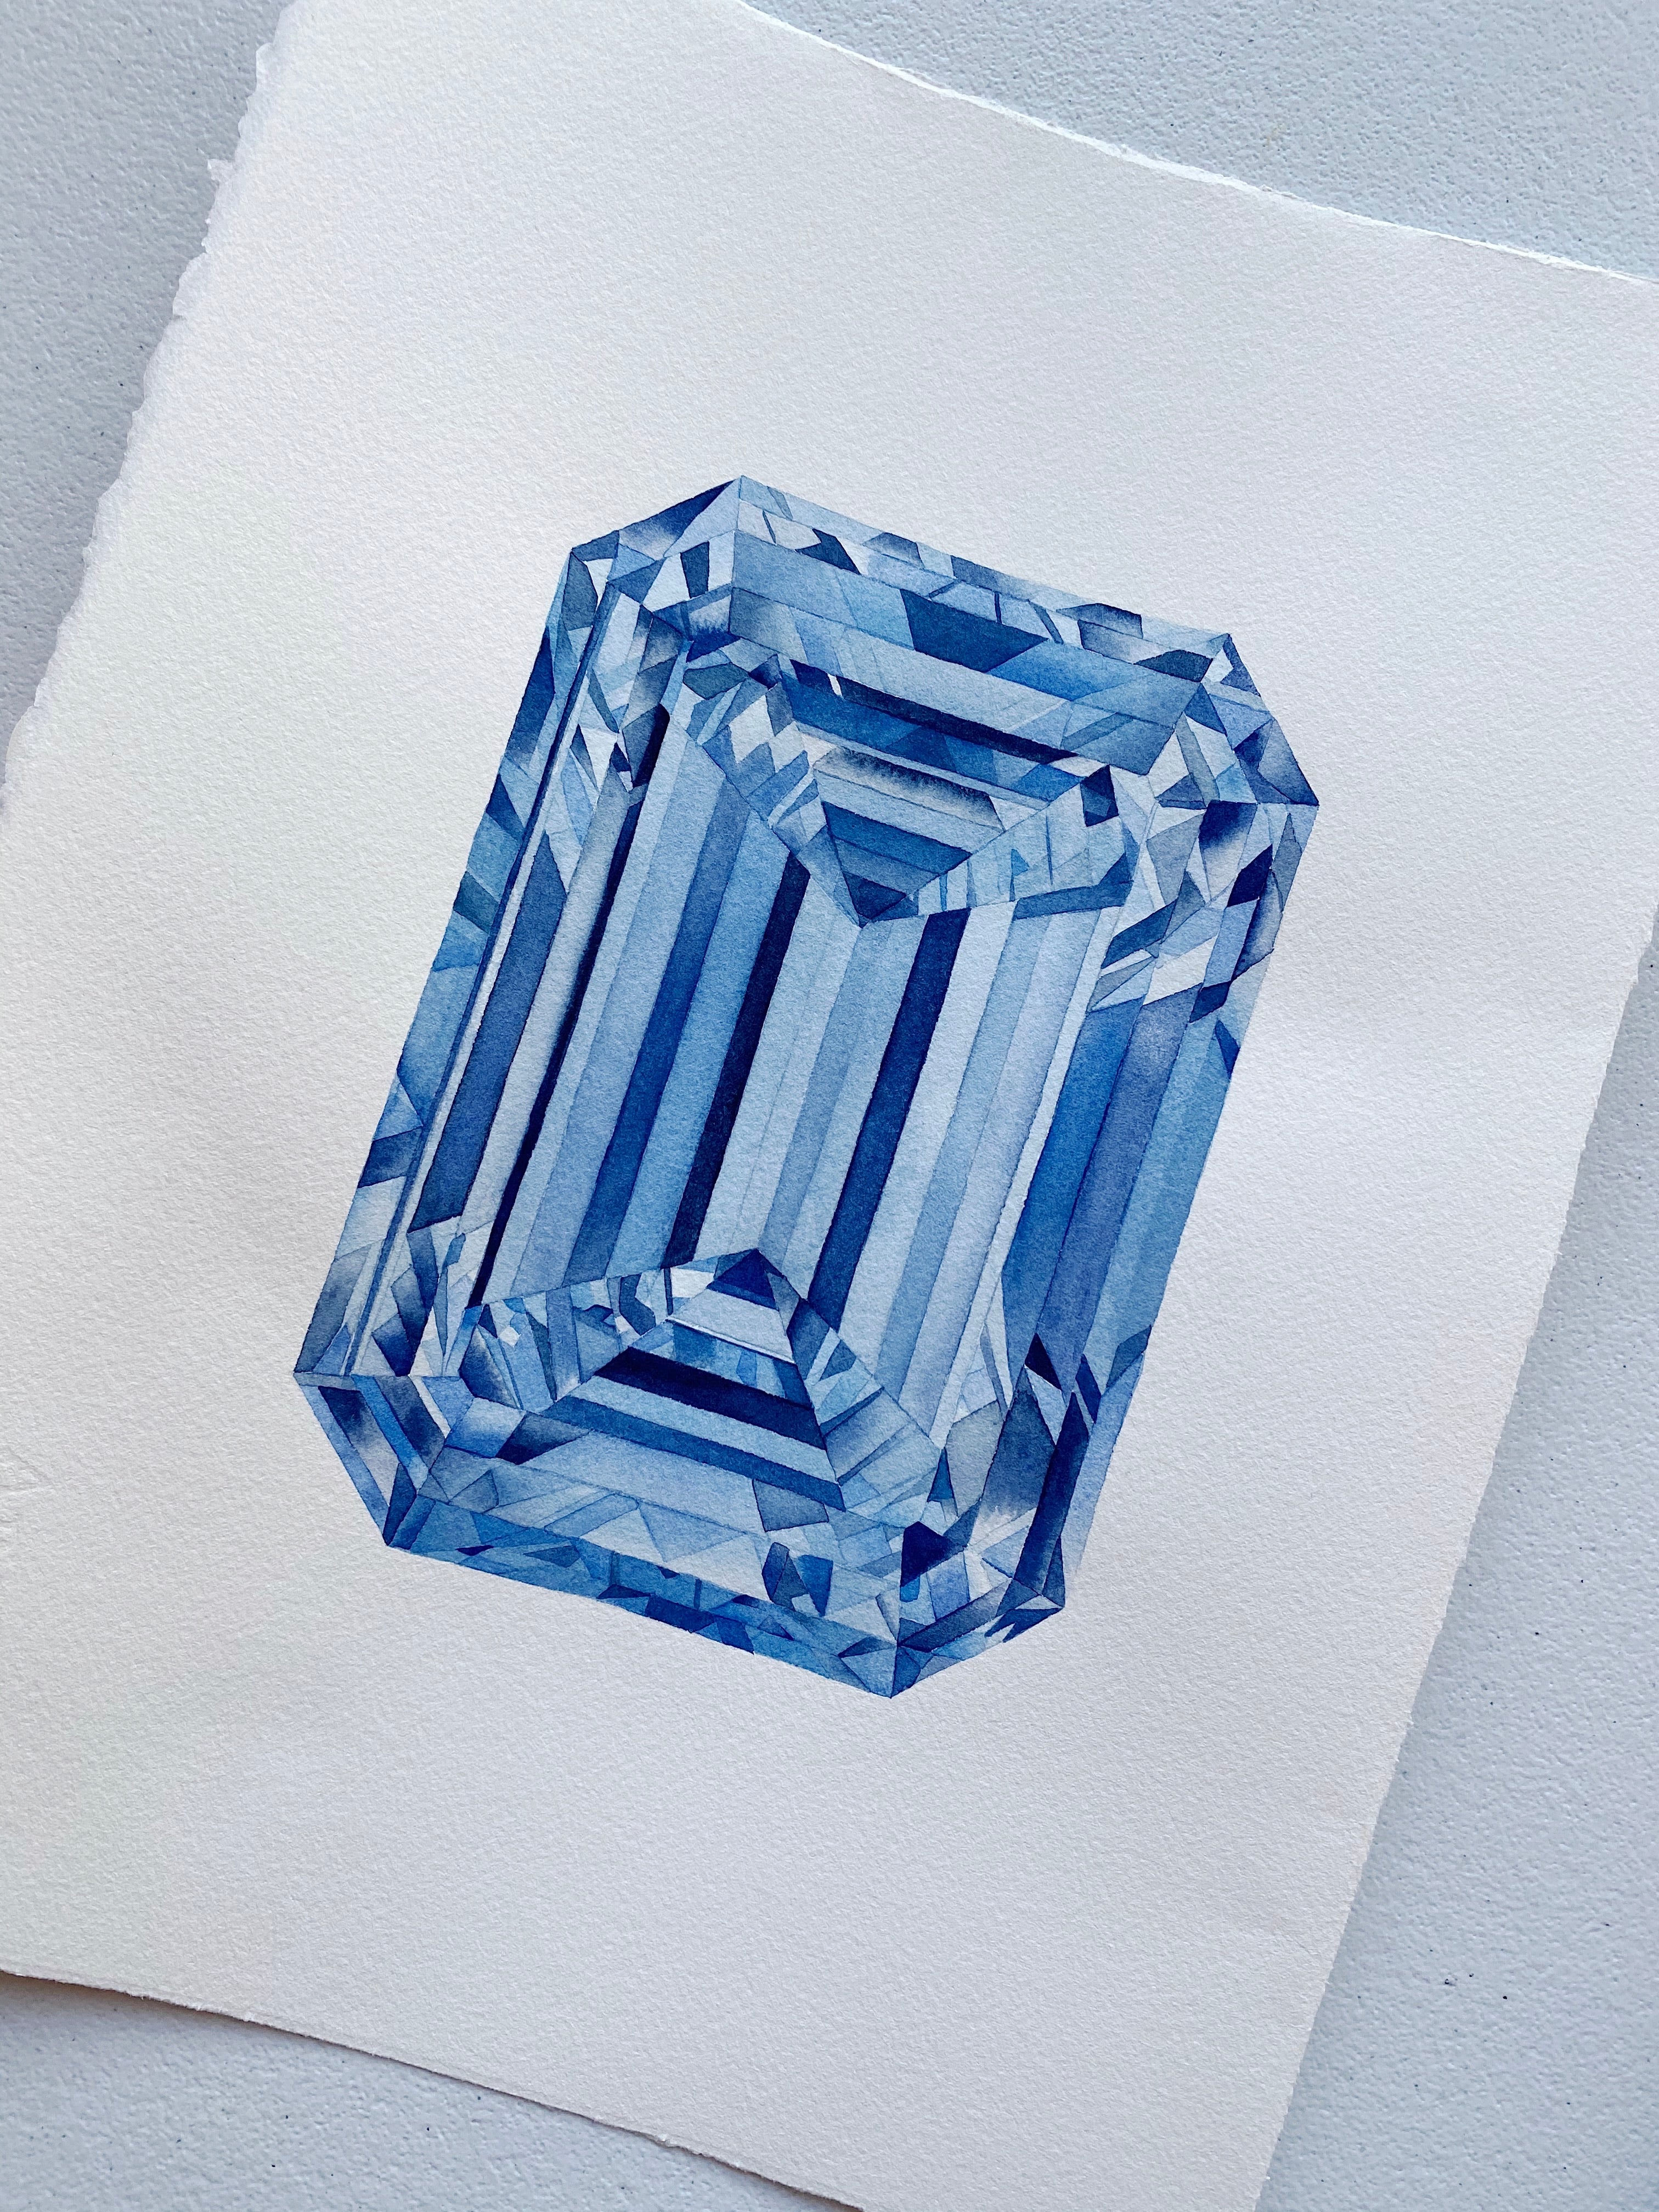 Original Painting - Watercolor Blue Diamond Gem 11x15 inches